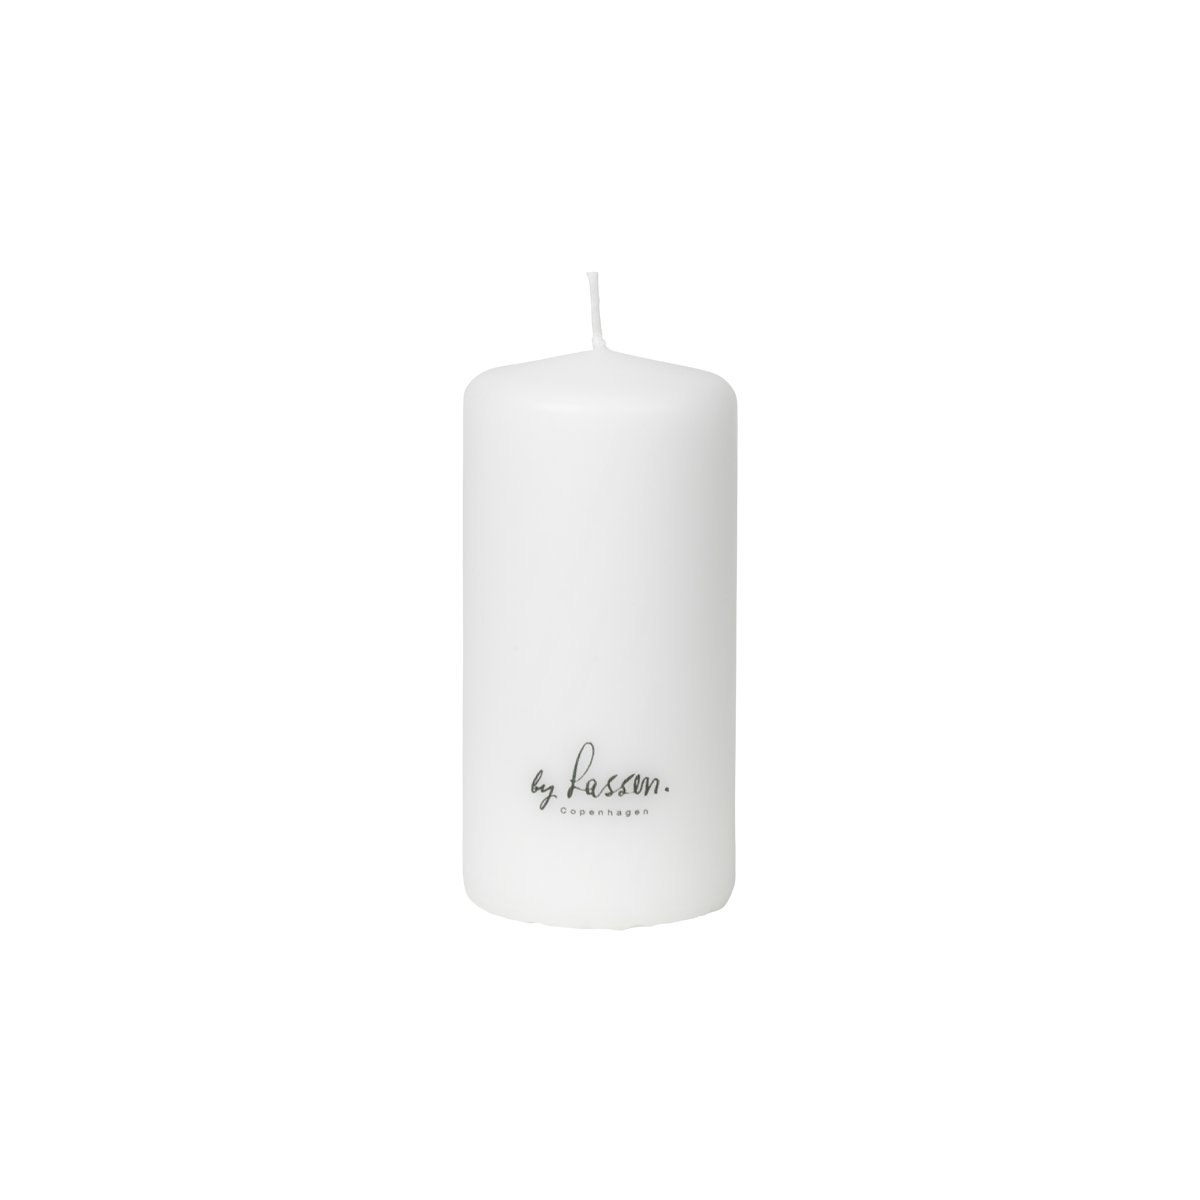 Light'in Candle - Medium /White /Block Light 3x5in